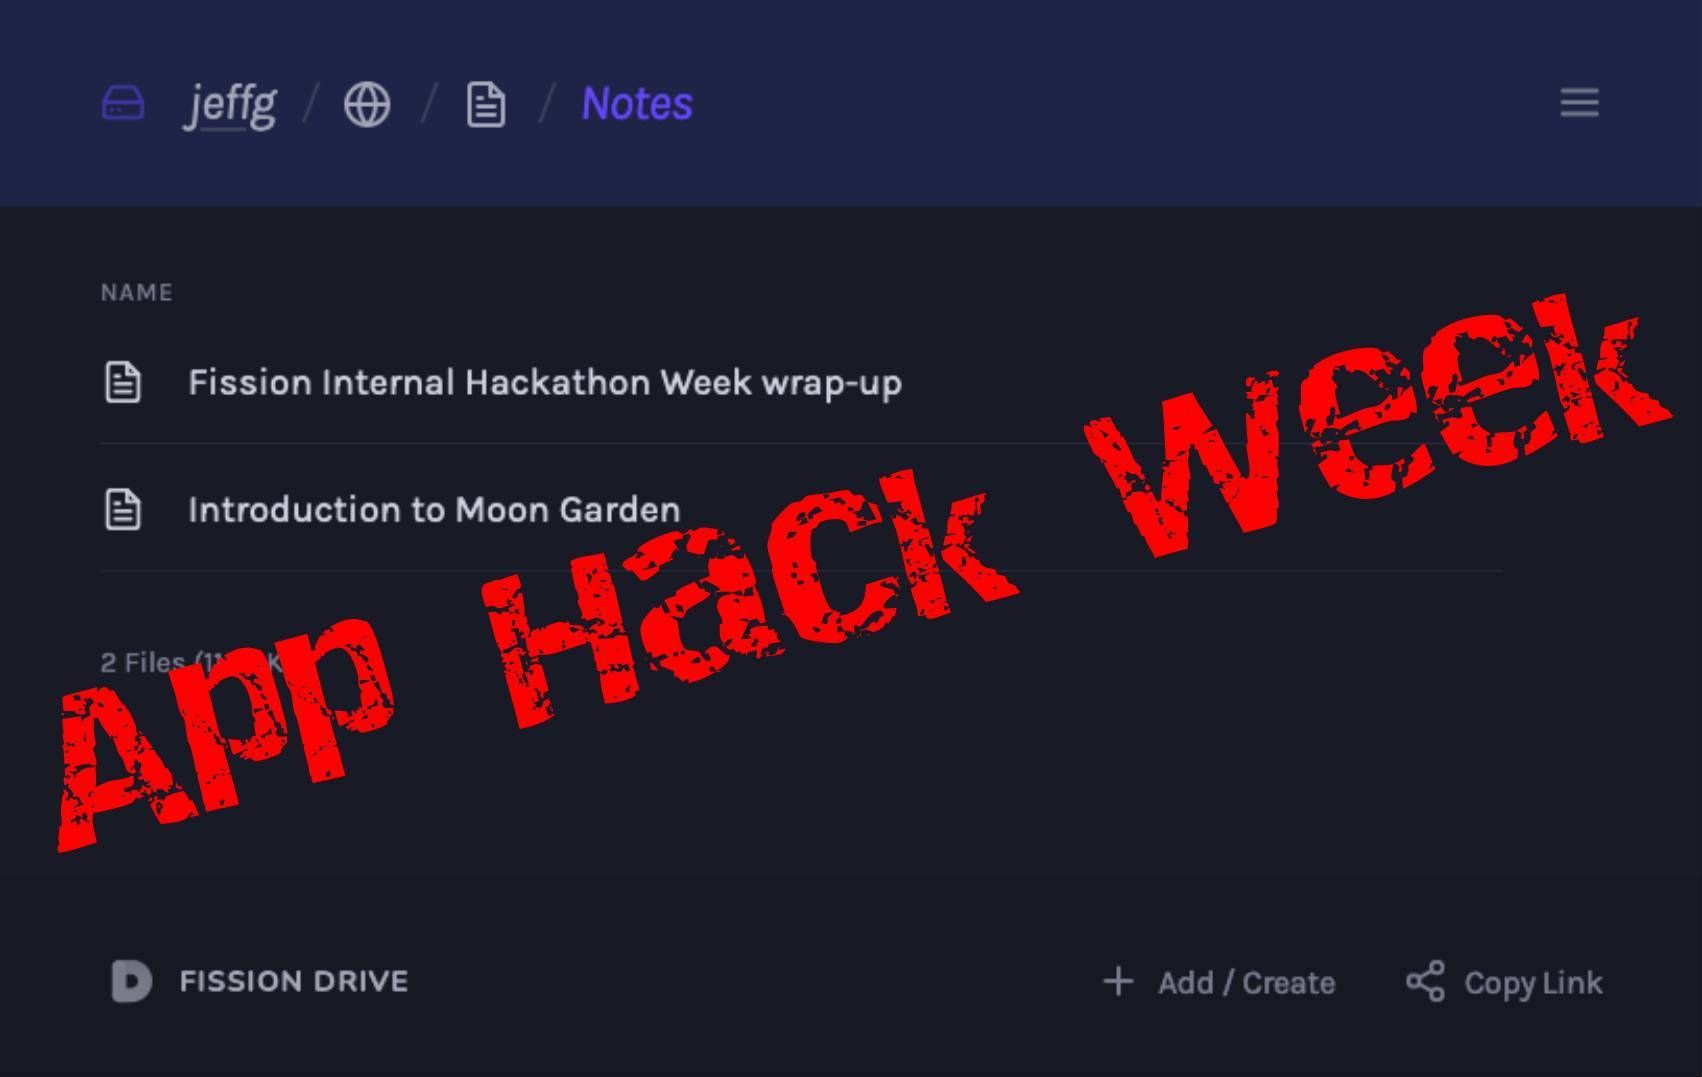 Fission Internal Hack Week Wrap-up